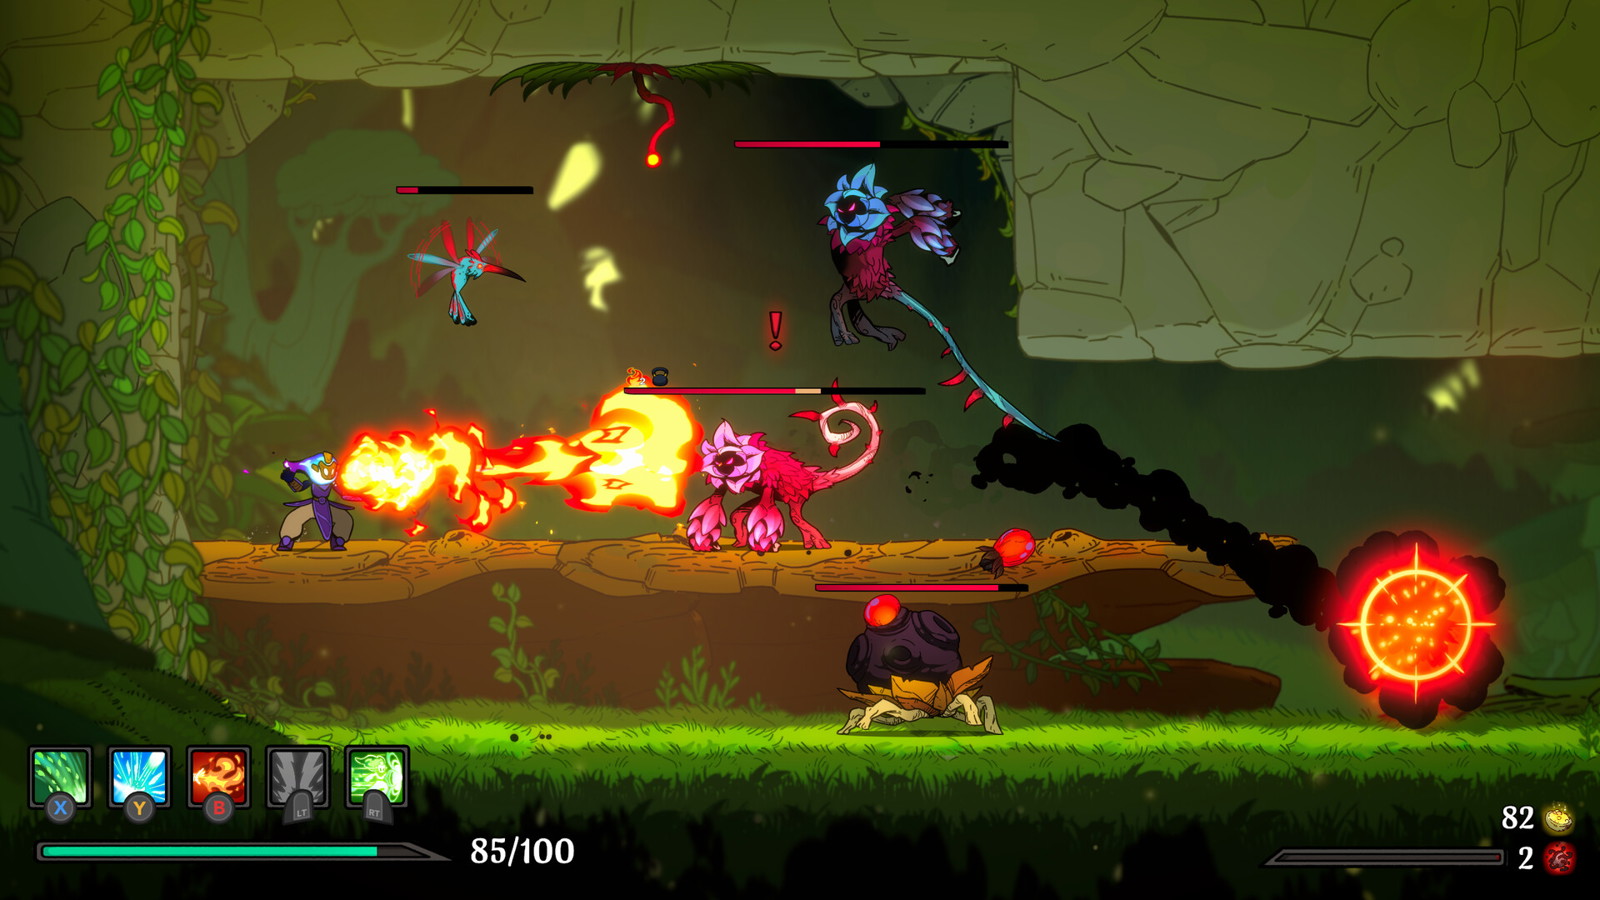 In-game screenshot from Spiritfall